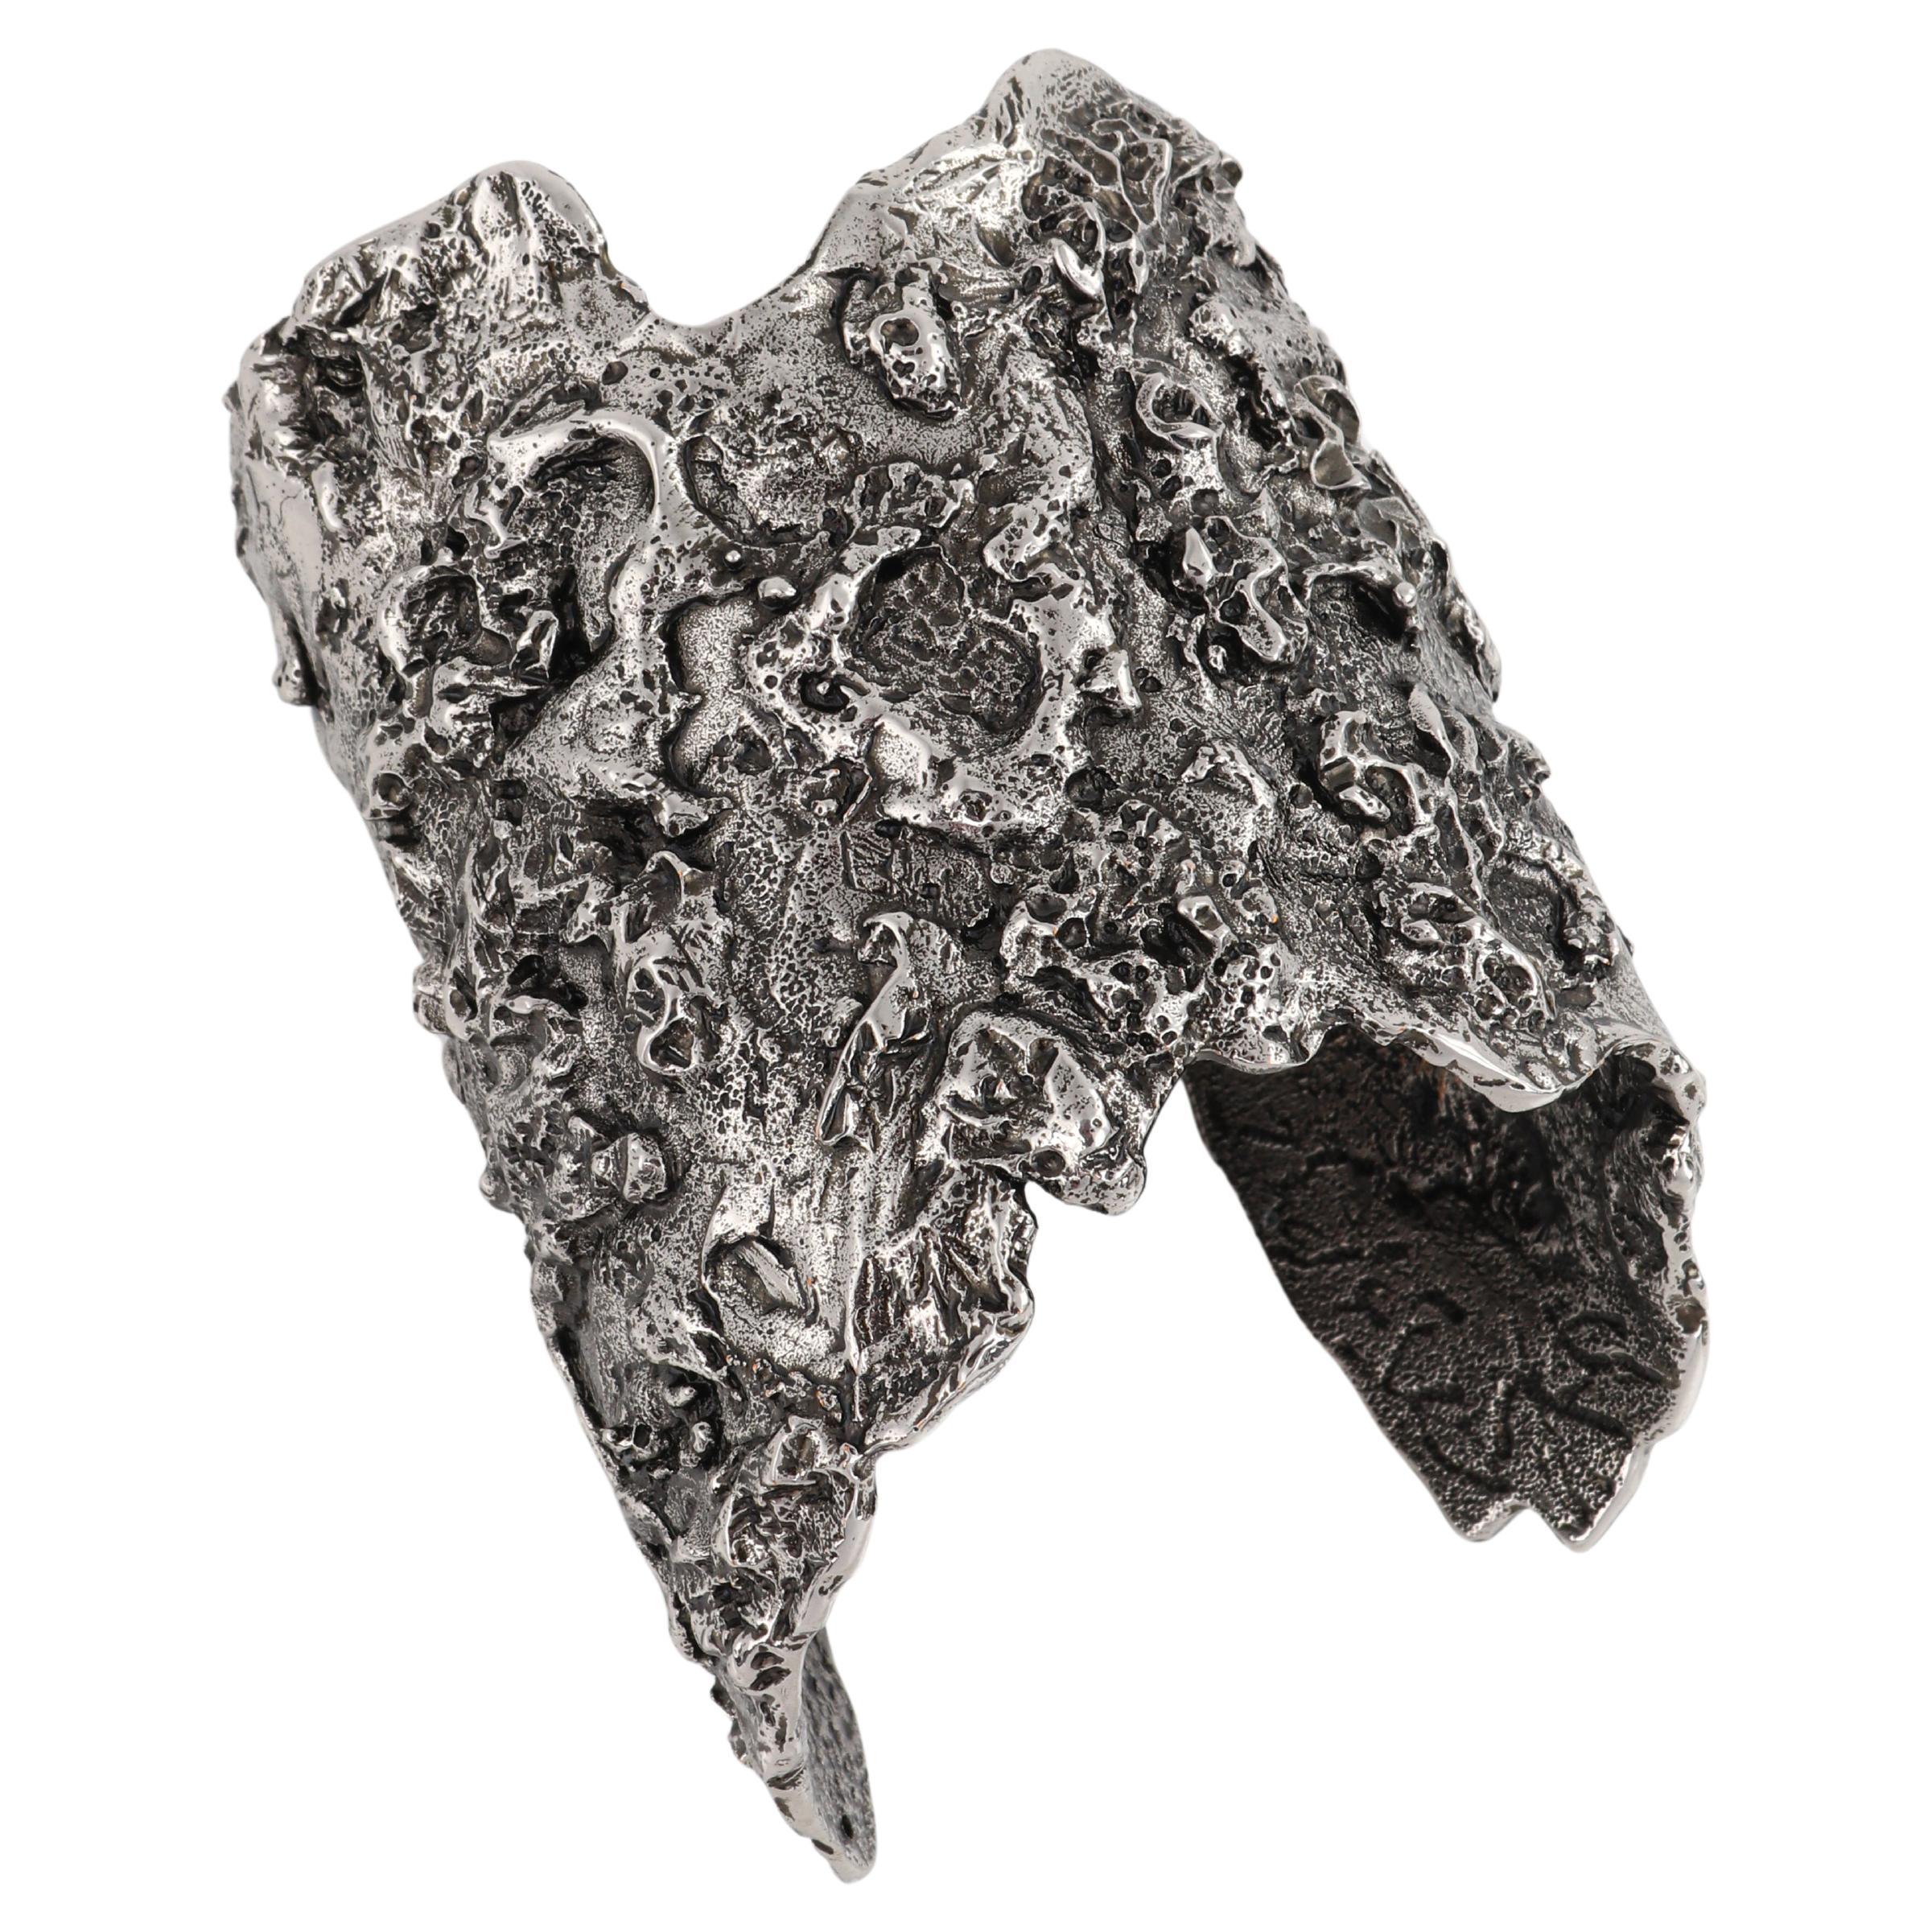 ALEXANDER McQUEEN A/W 2017 "Molten Cuff" Antique Silver Textured Bangle Bracelet For Sale